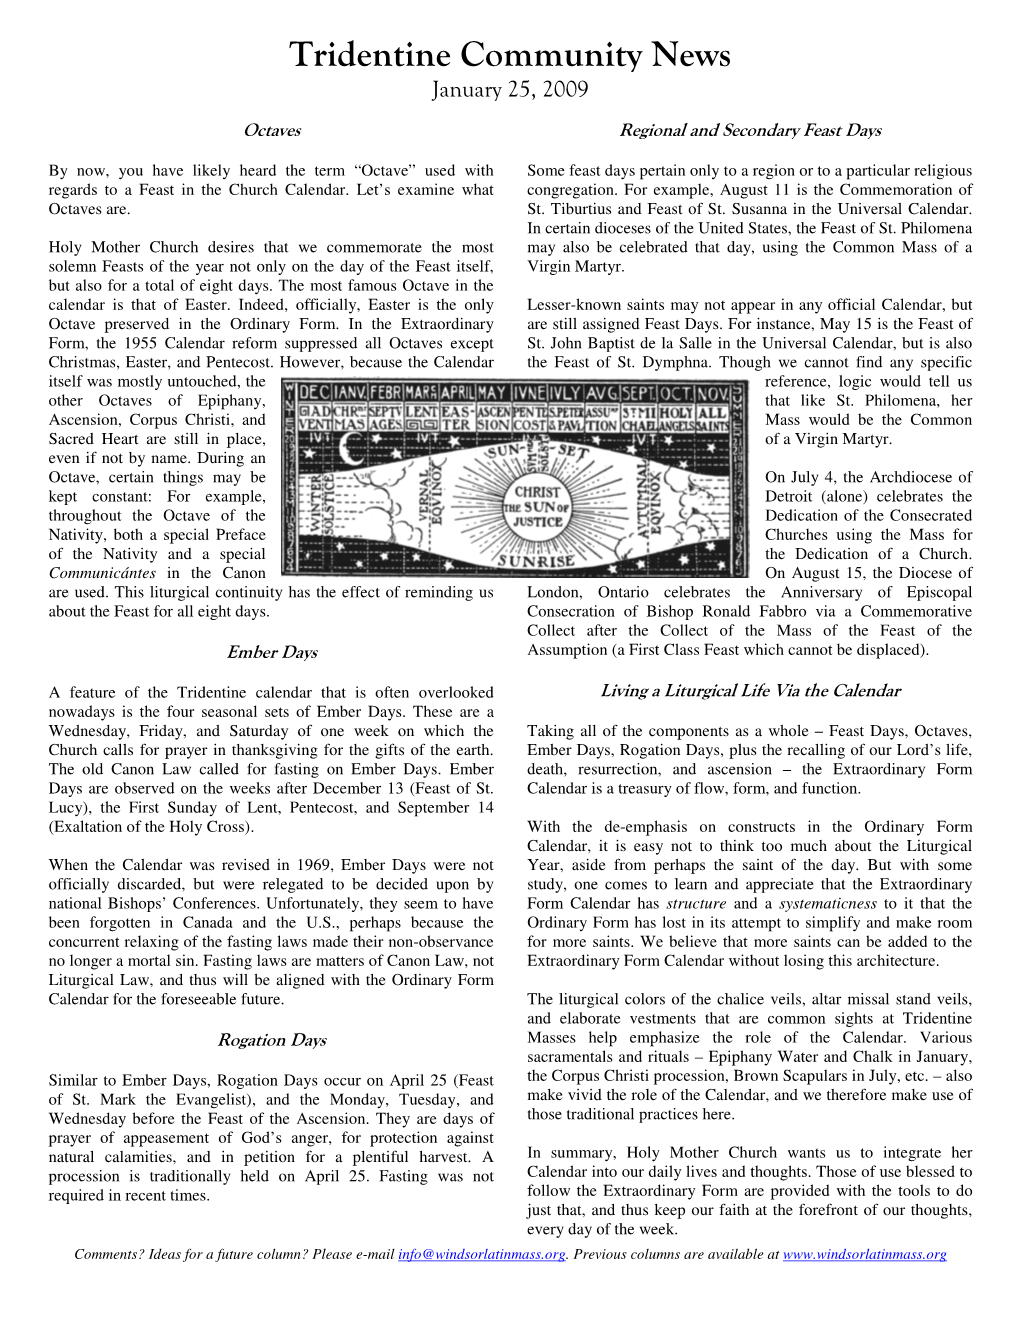 Tridentine Community News January 25, 2009